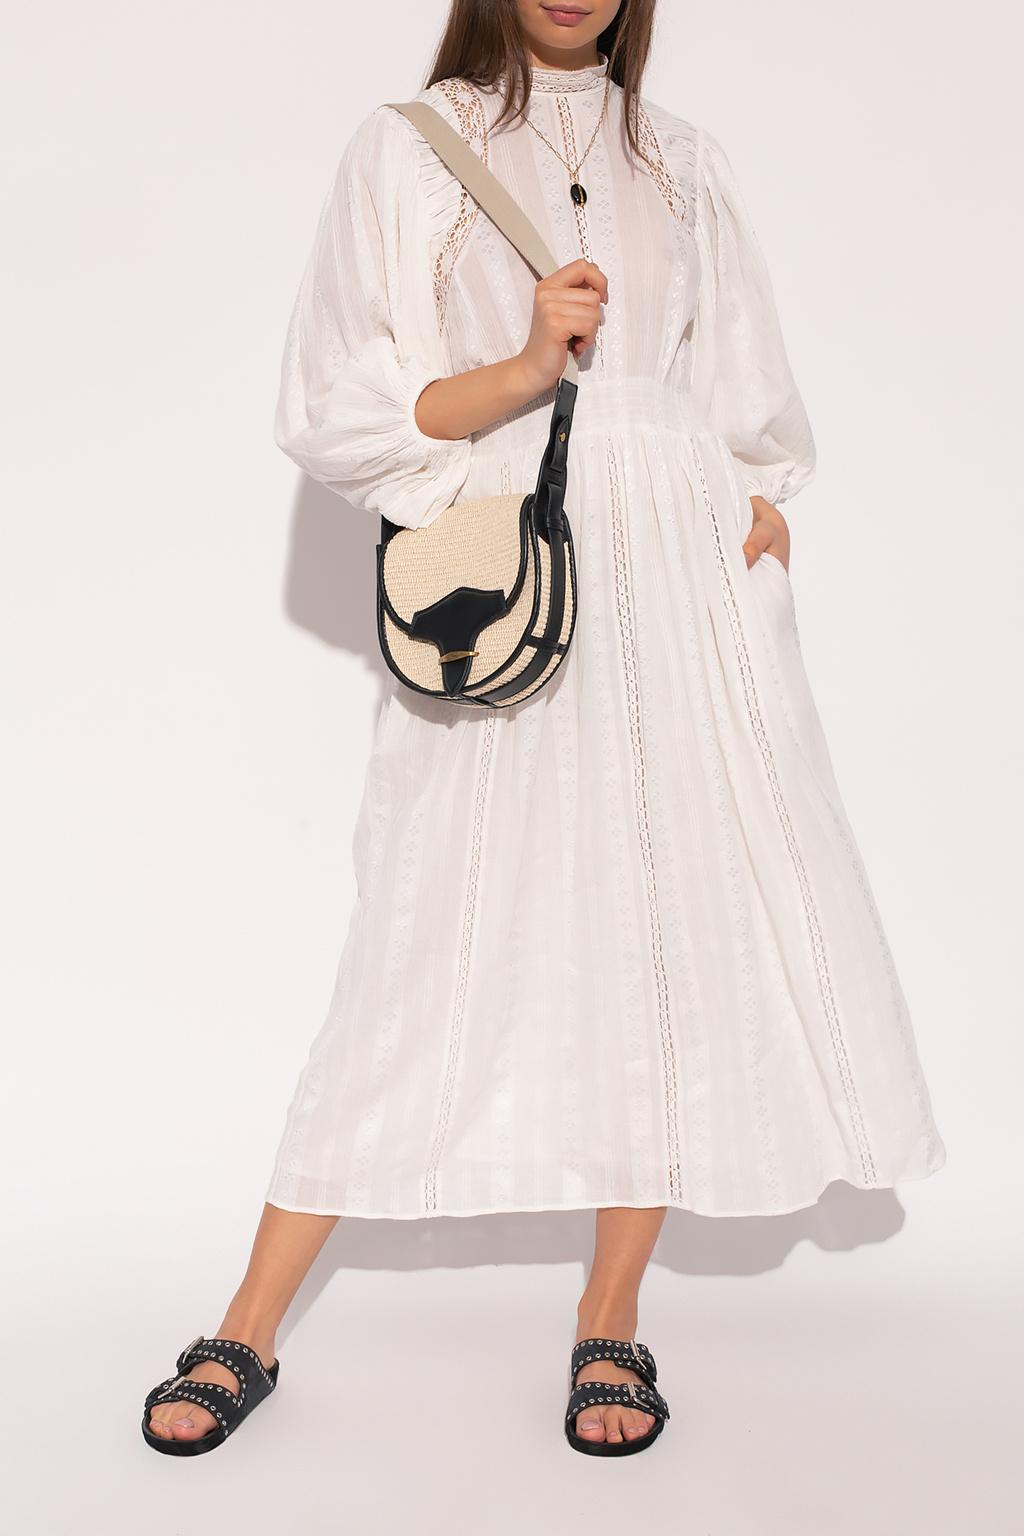 Isabel Marant Dress Etoile Sale | website.jkuat.ac.ke